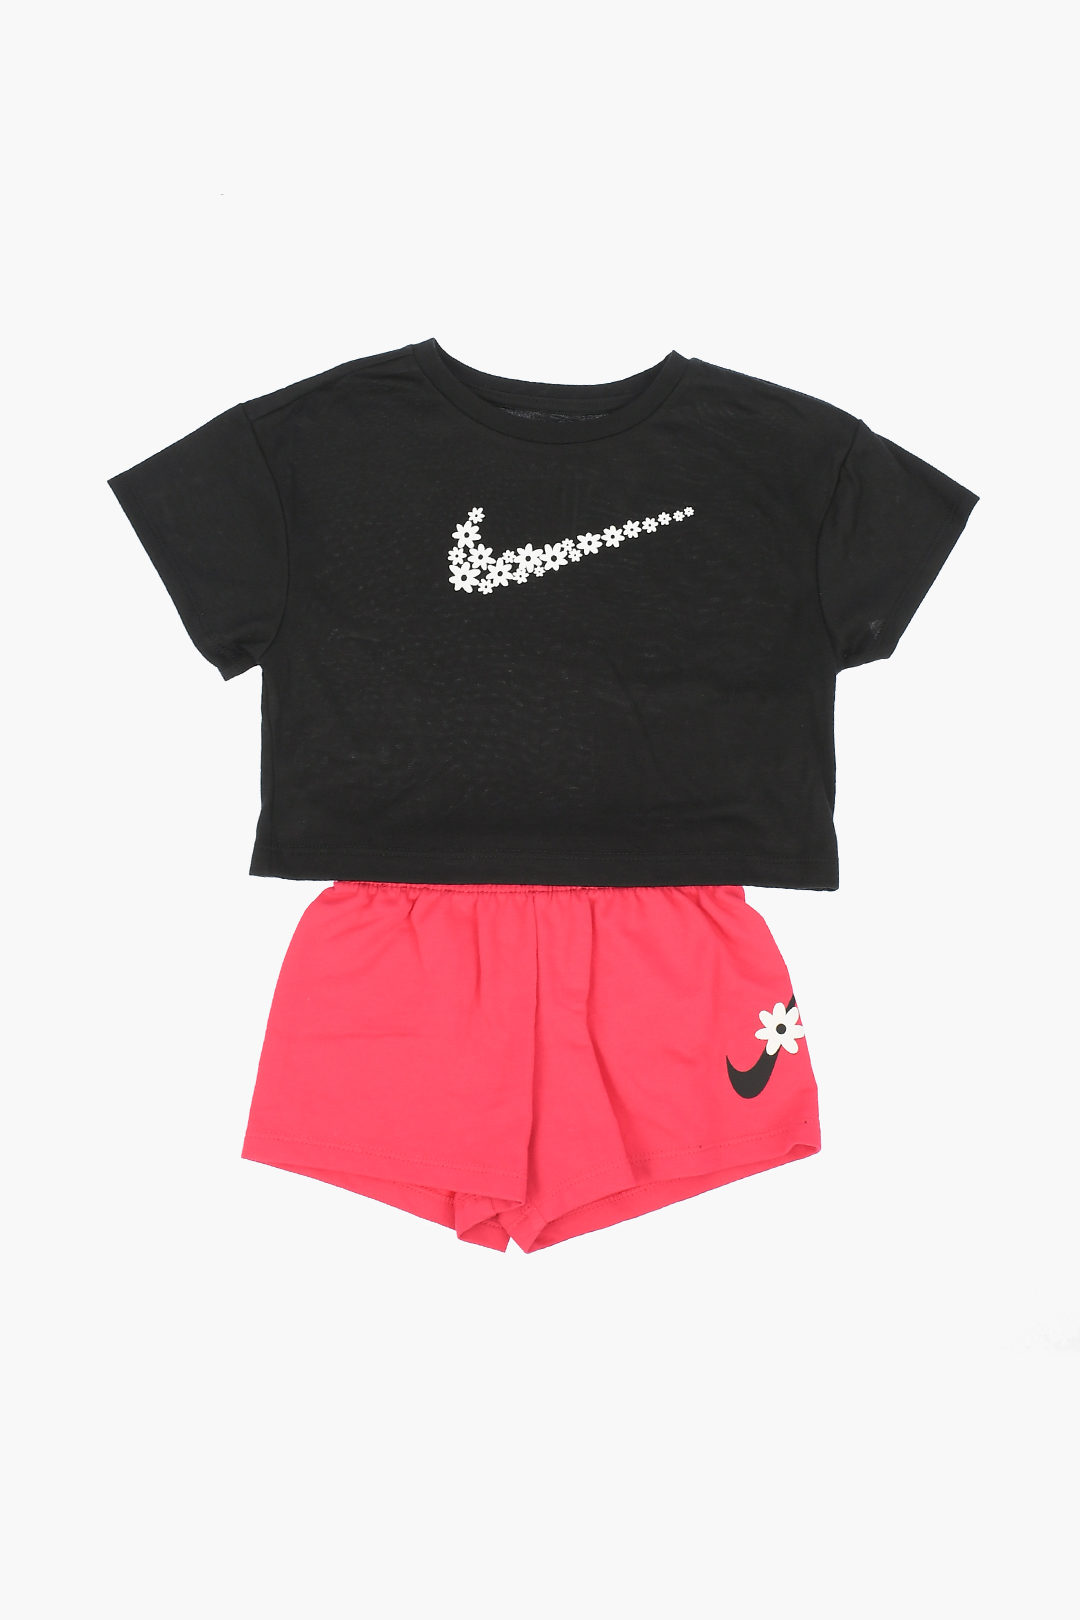 Nike Glow Time Boxy Tee and Shorts Set Preschool Set Black Pink